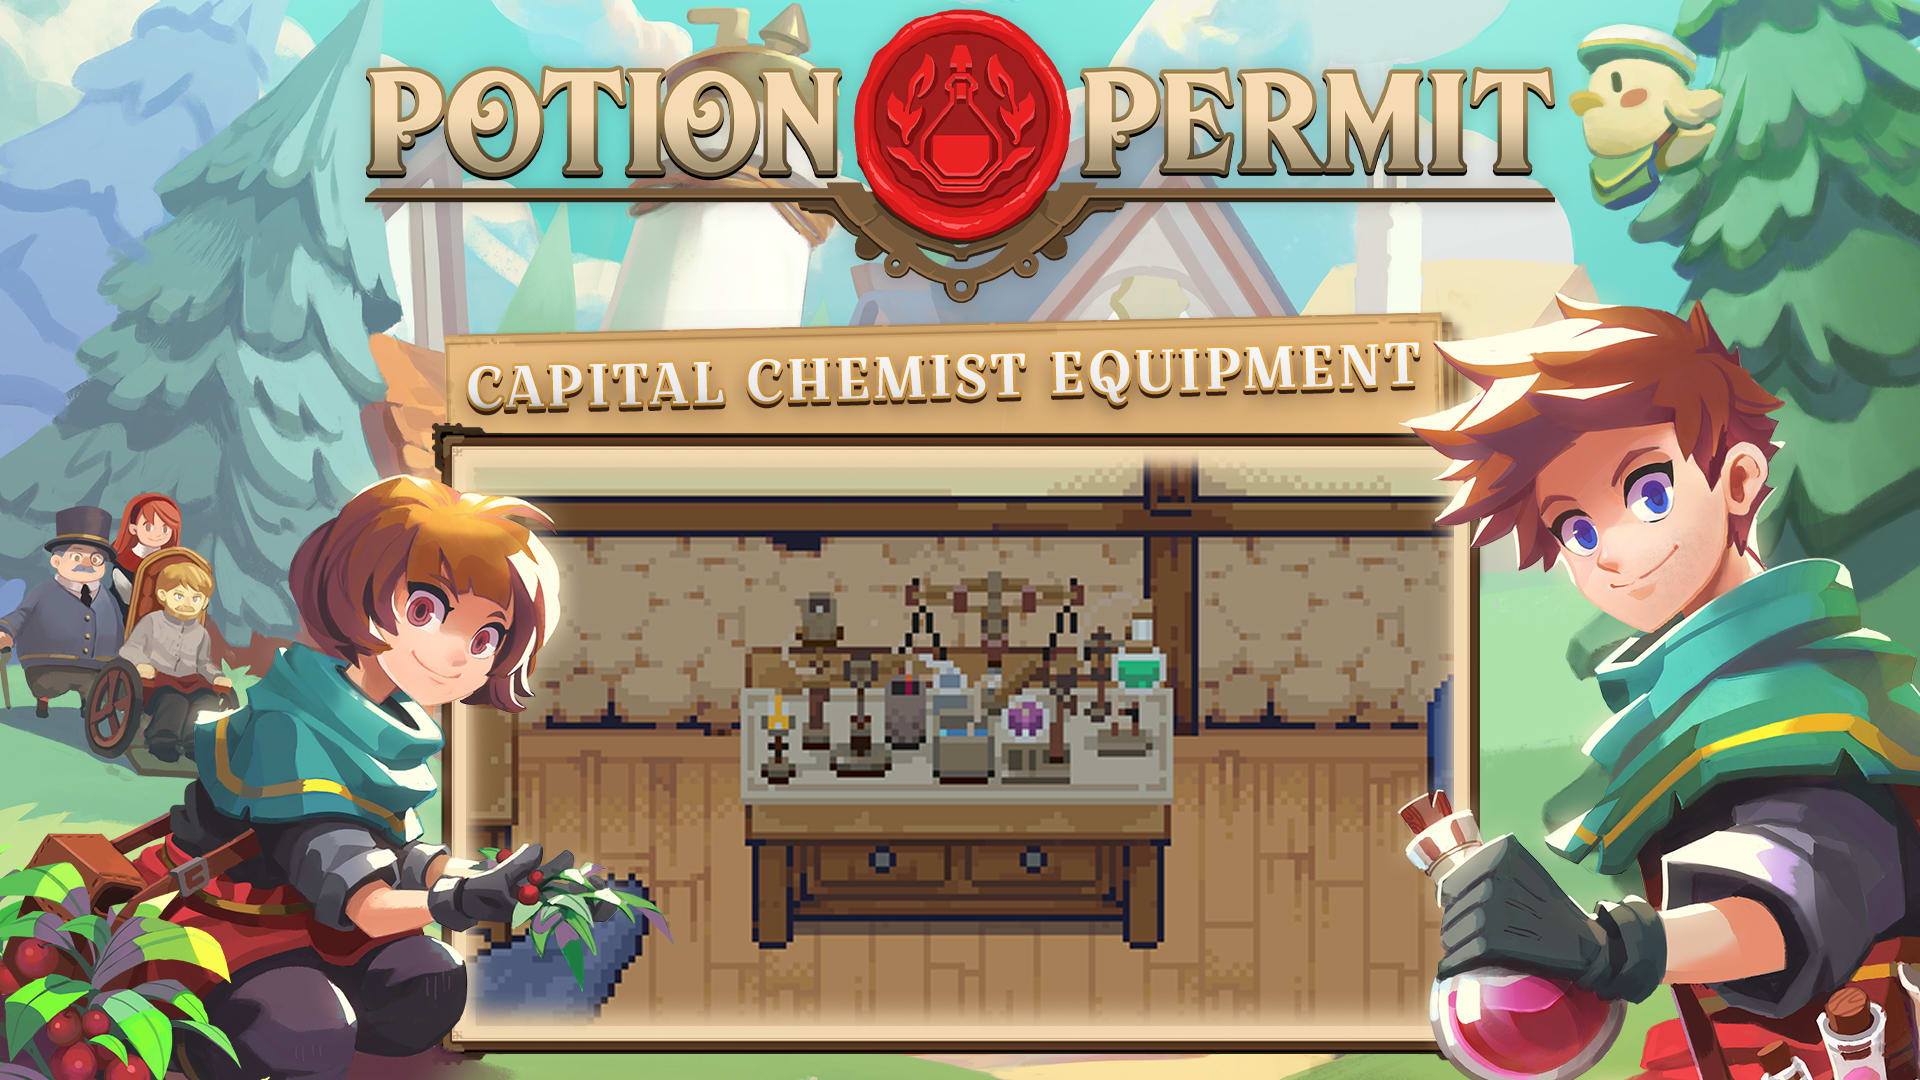  Potion Permit - Capital Chemist Equipment